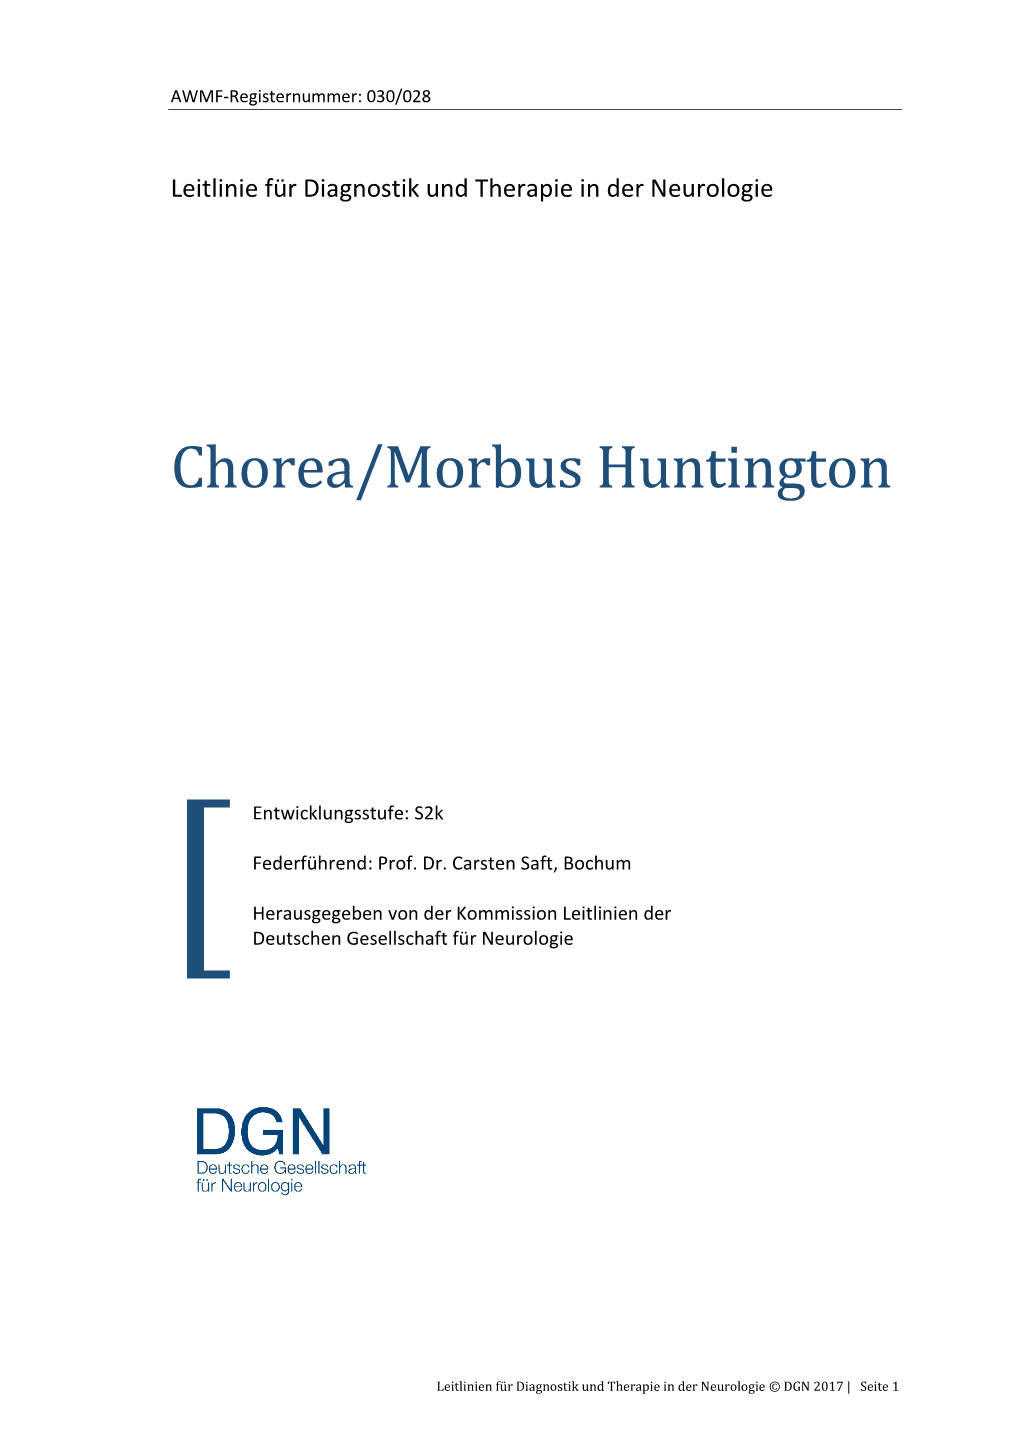 Chorea/Morbus Huntington